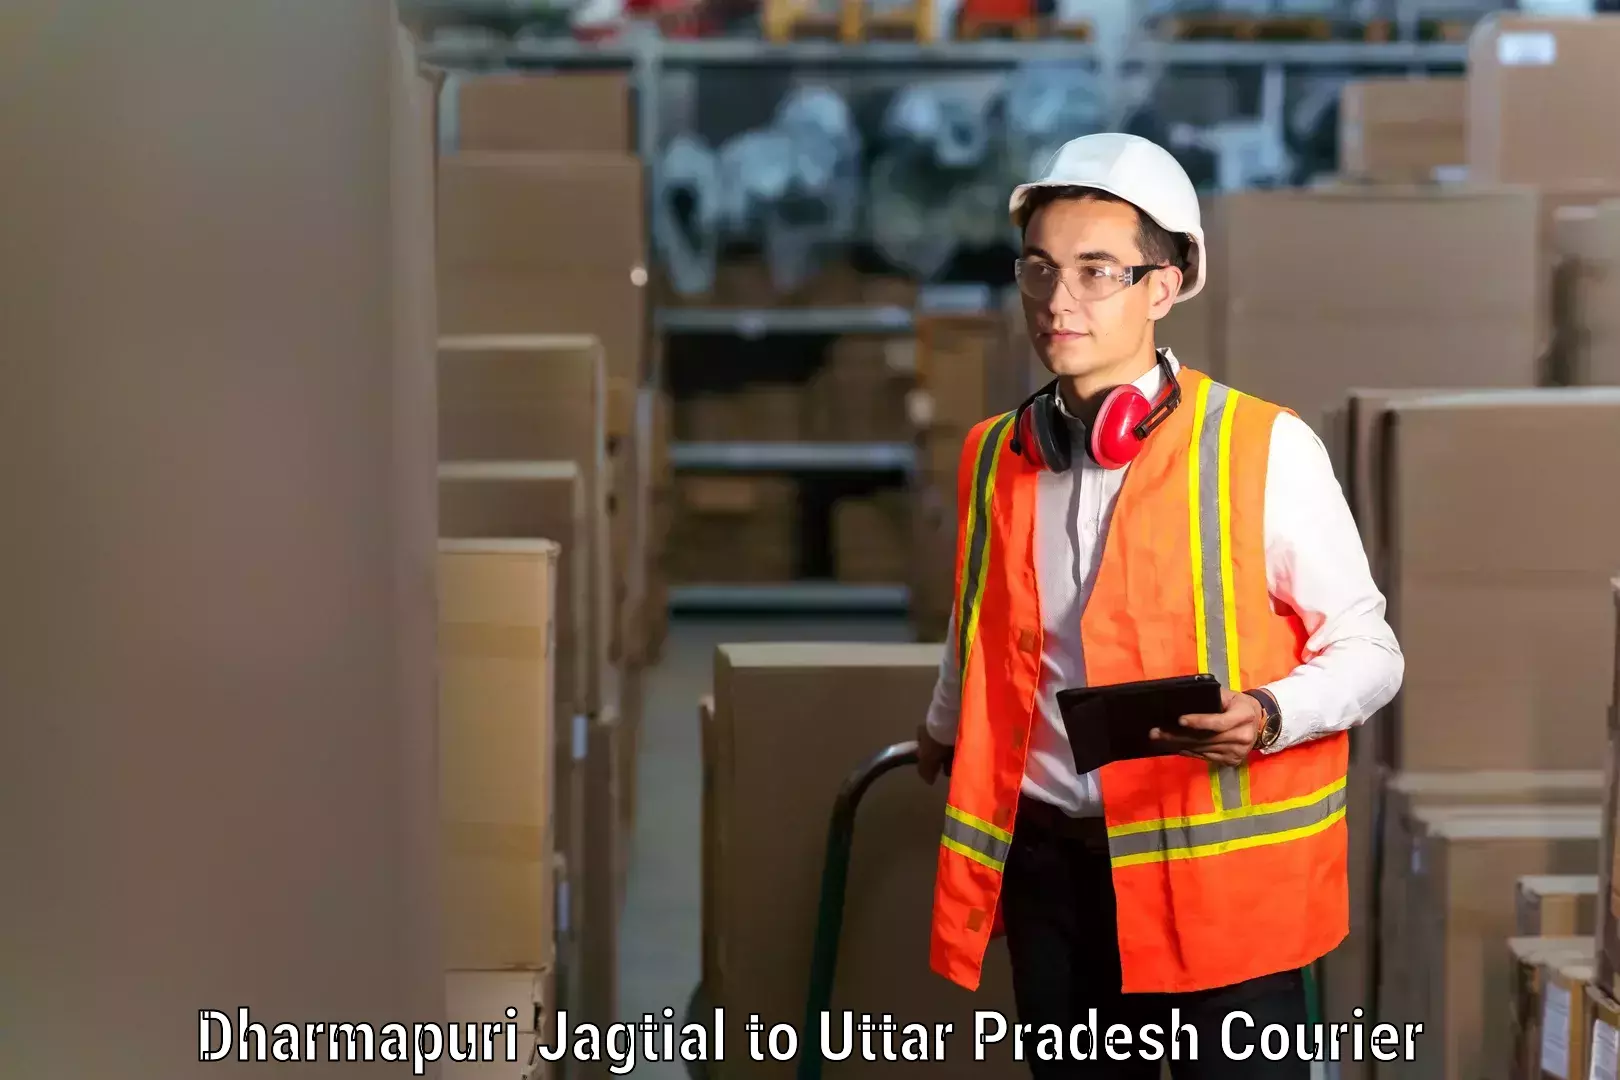 Trusted moving company Dharmapuri Jagtial to Budaun